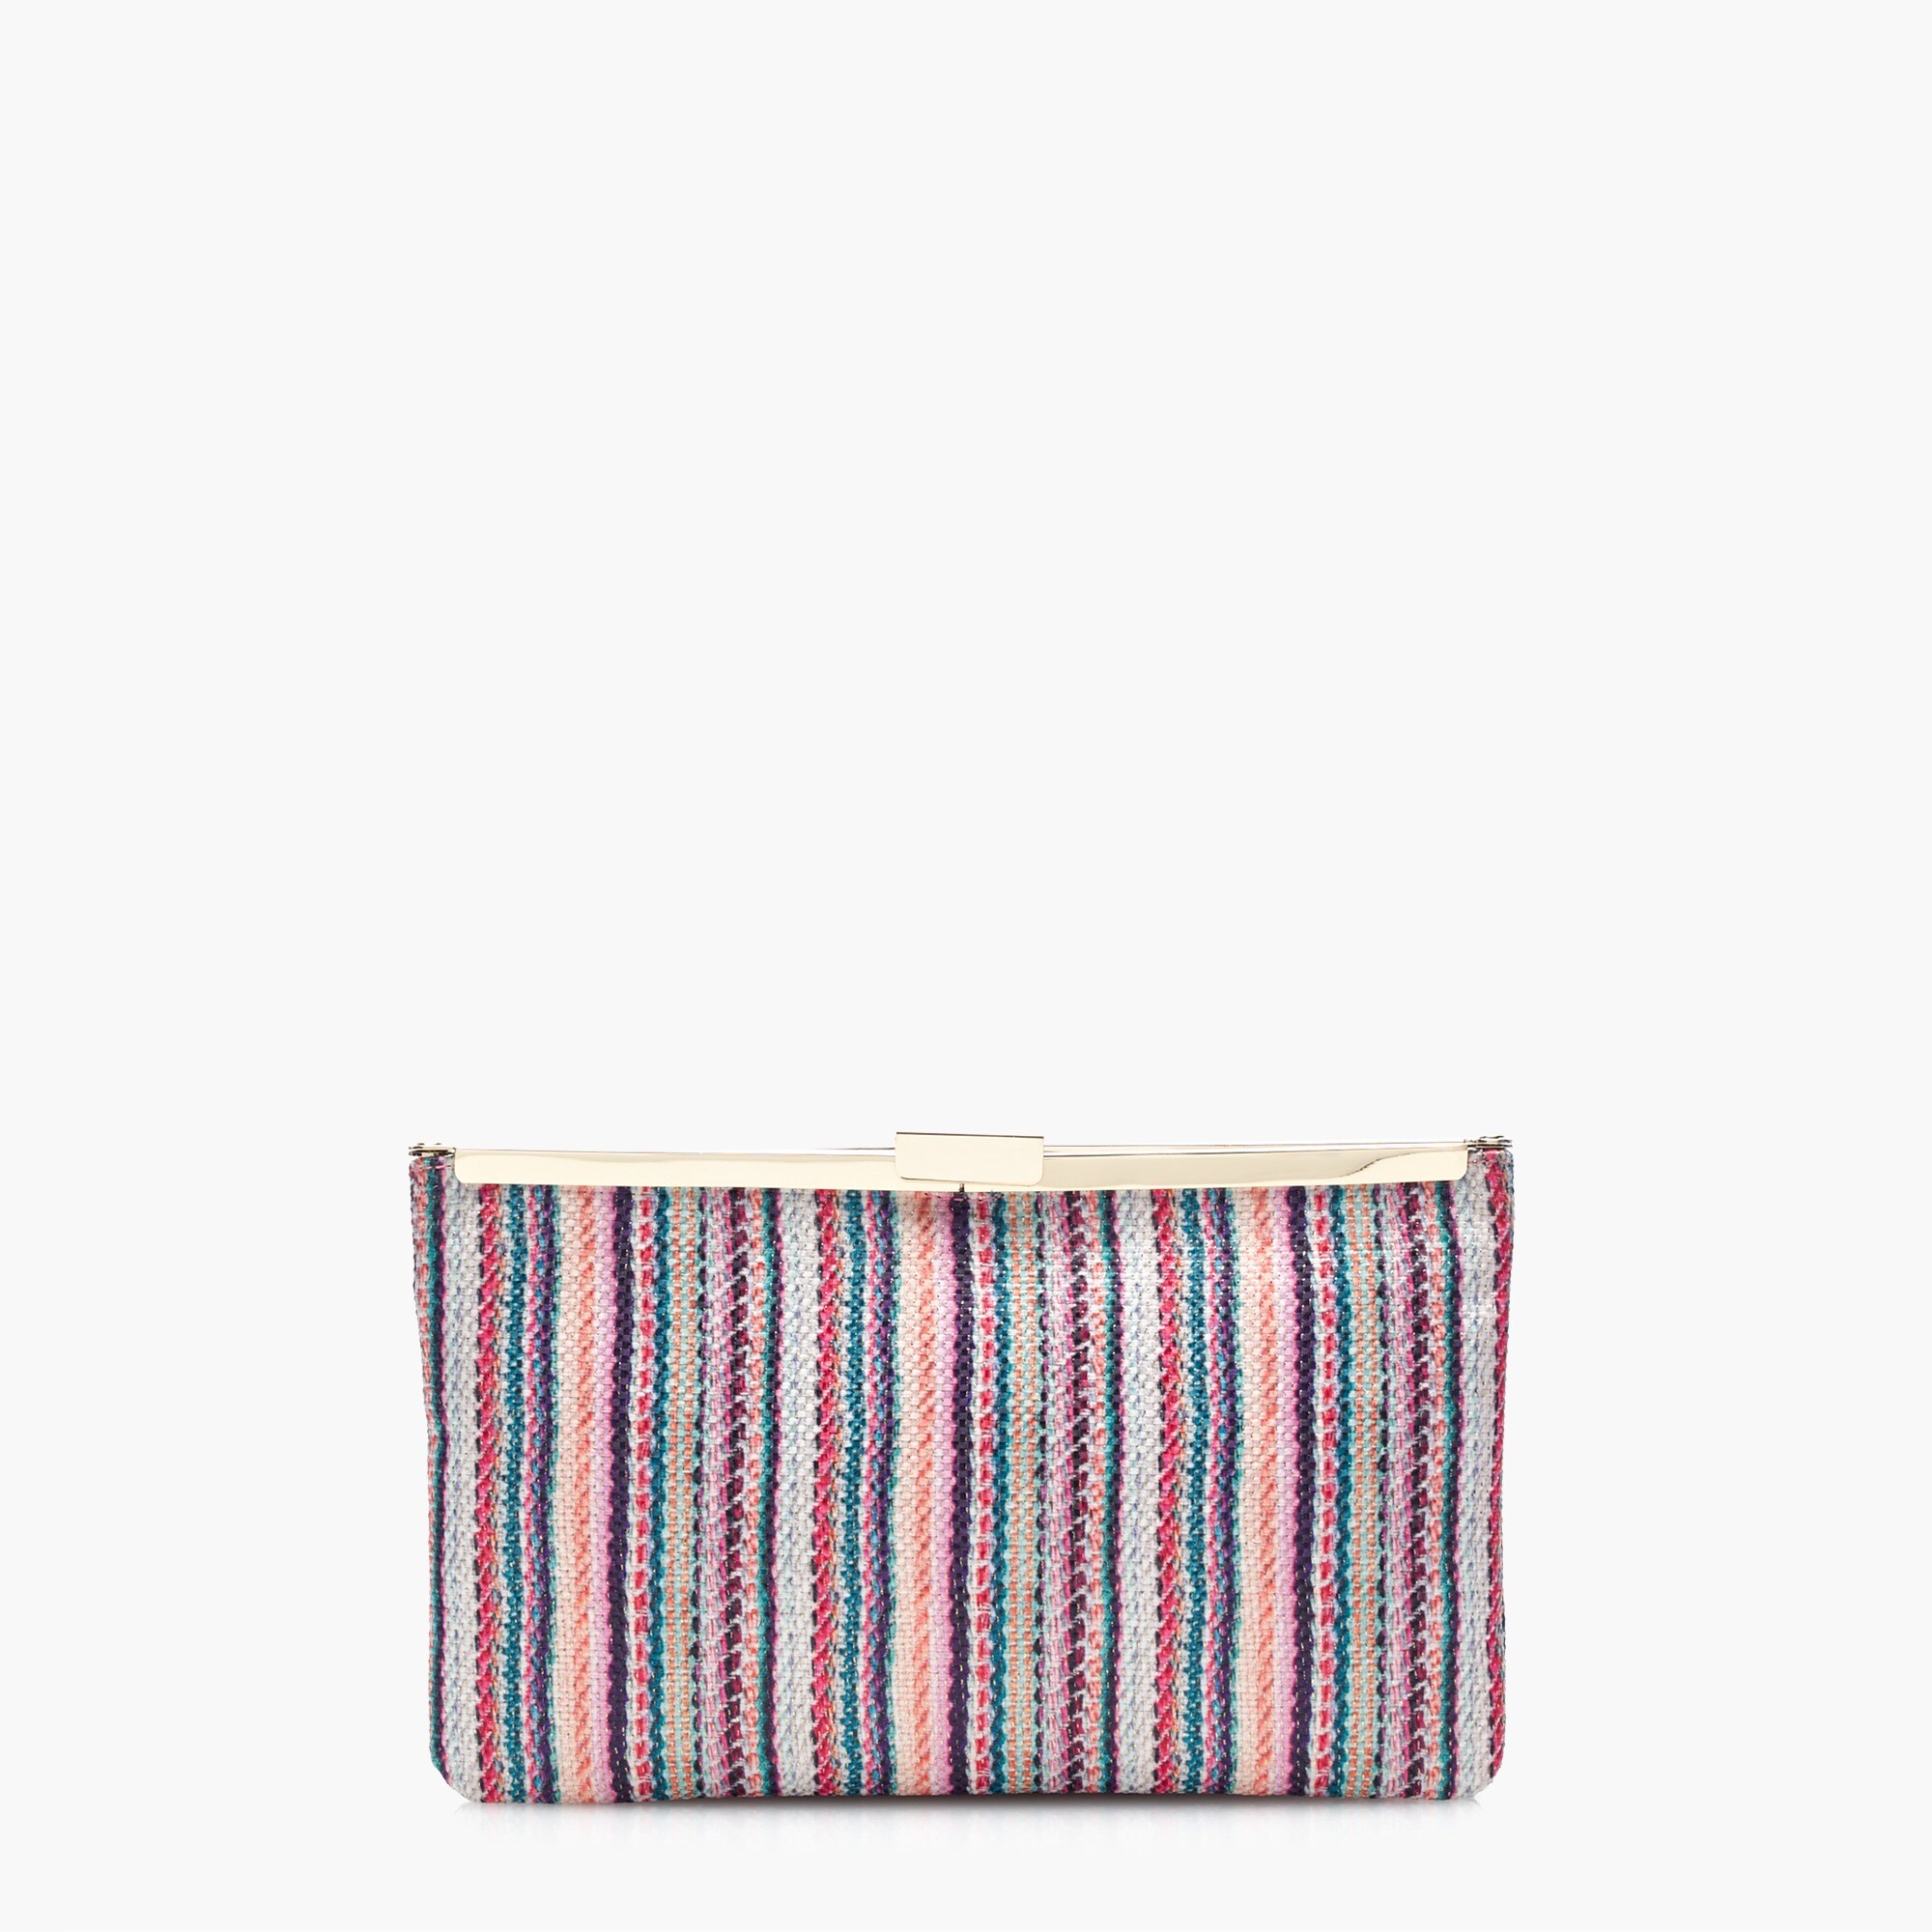 Woven striped clutch : Women clutches & pouches | J.Crew